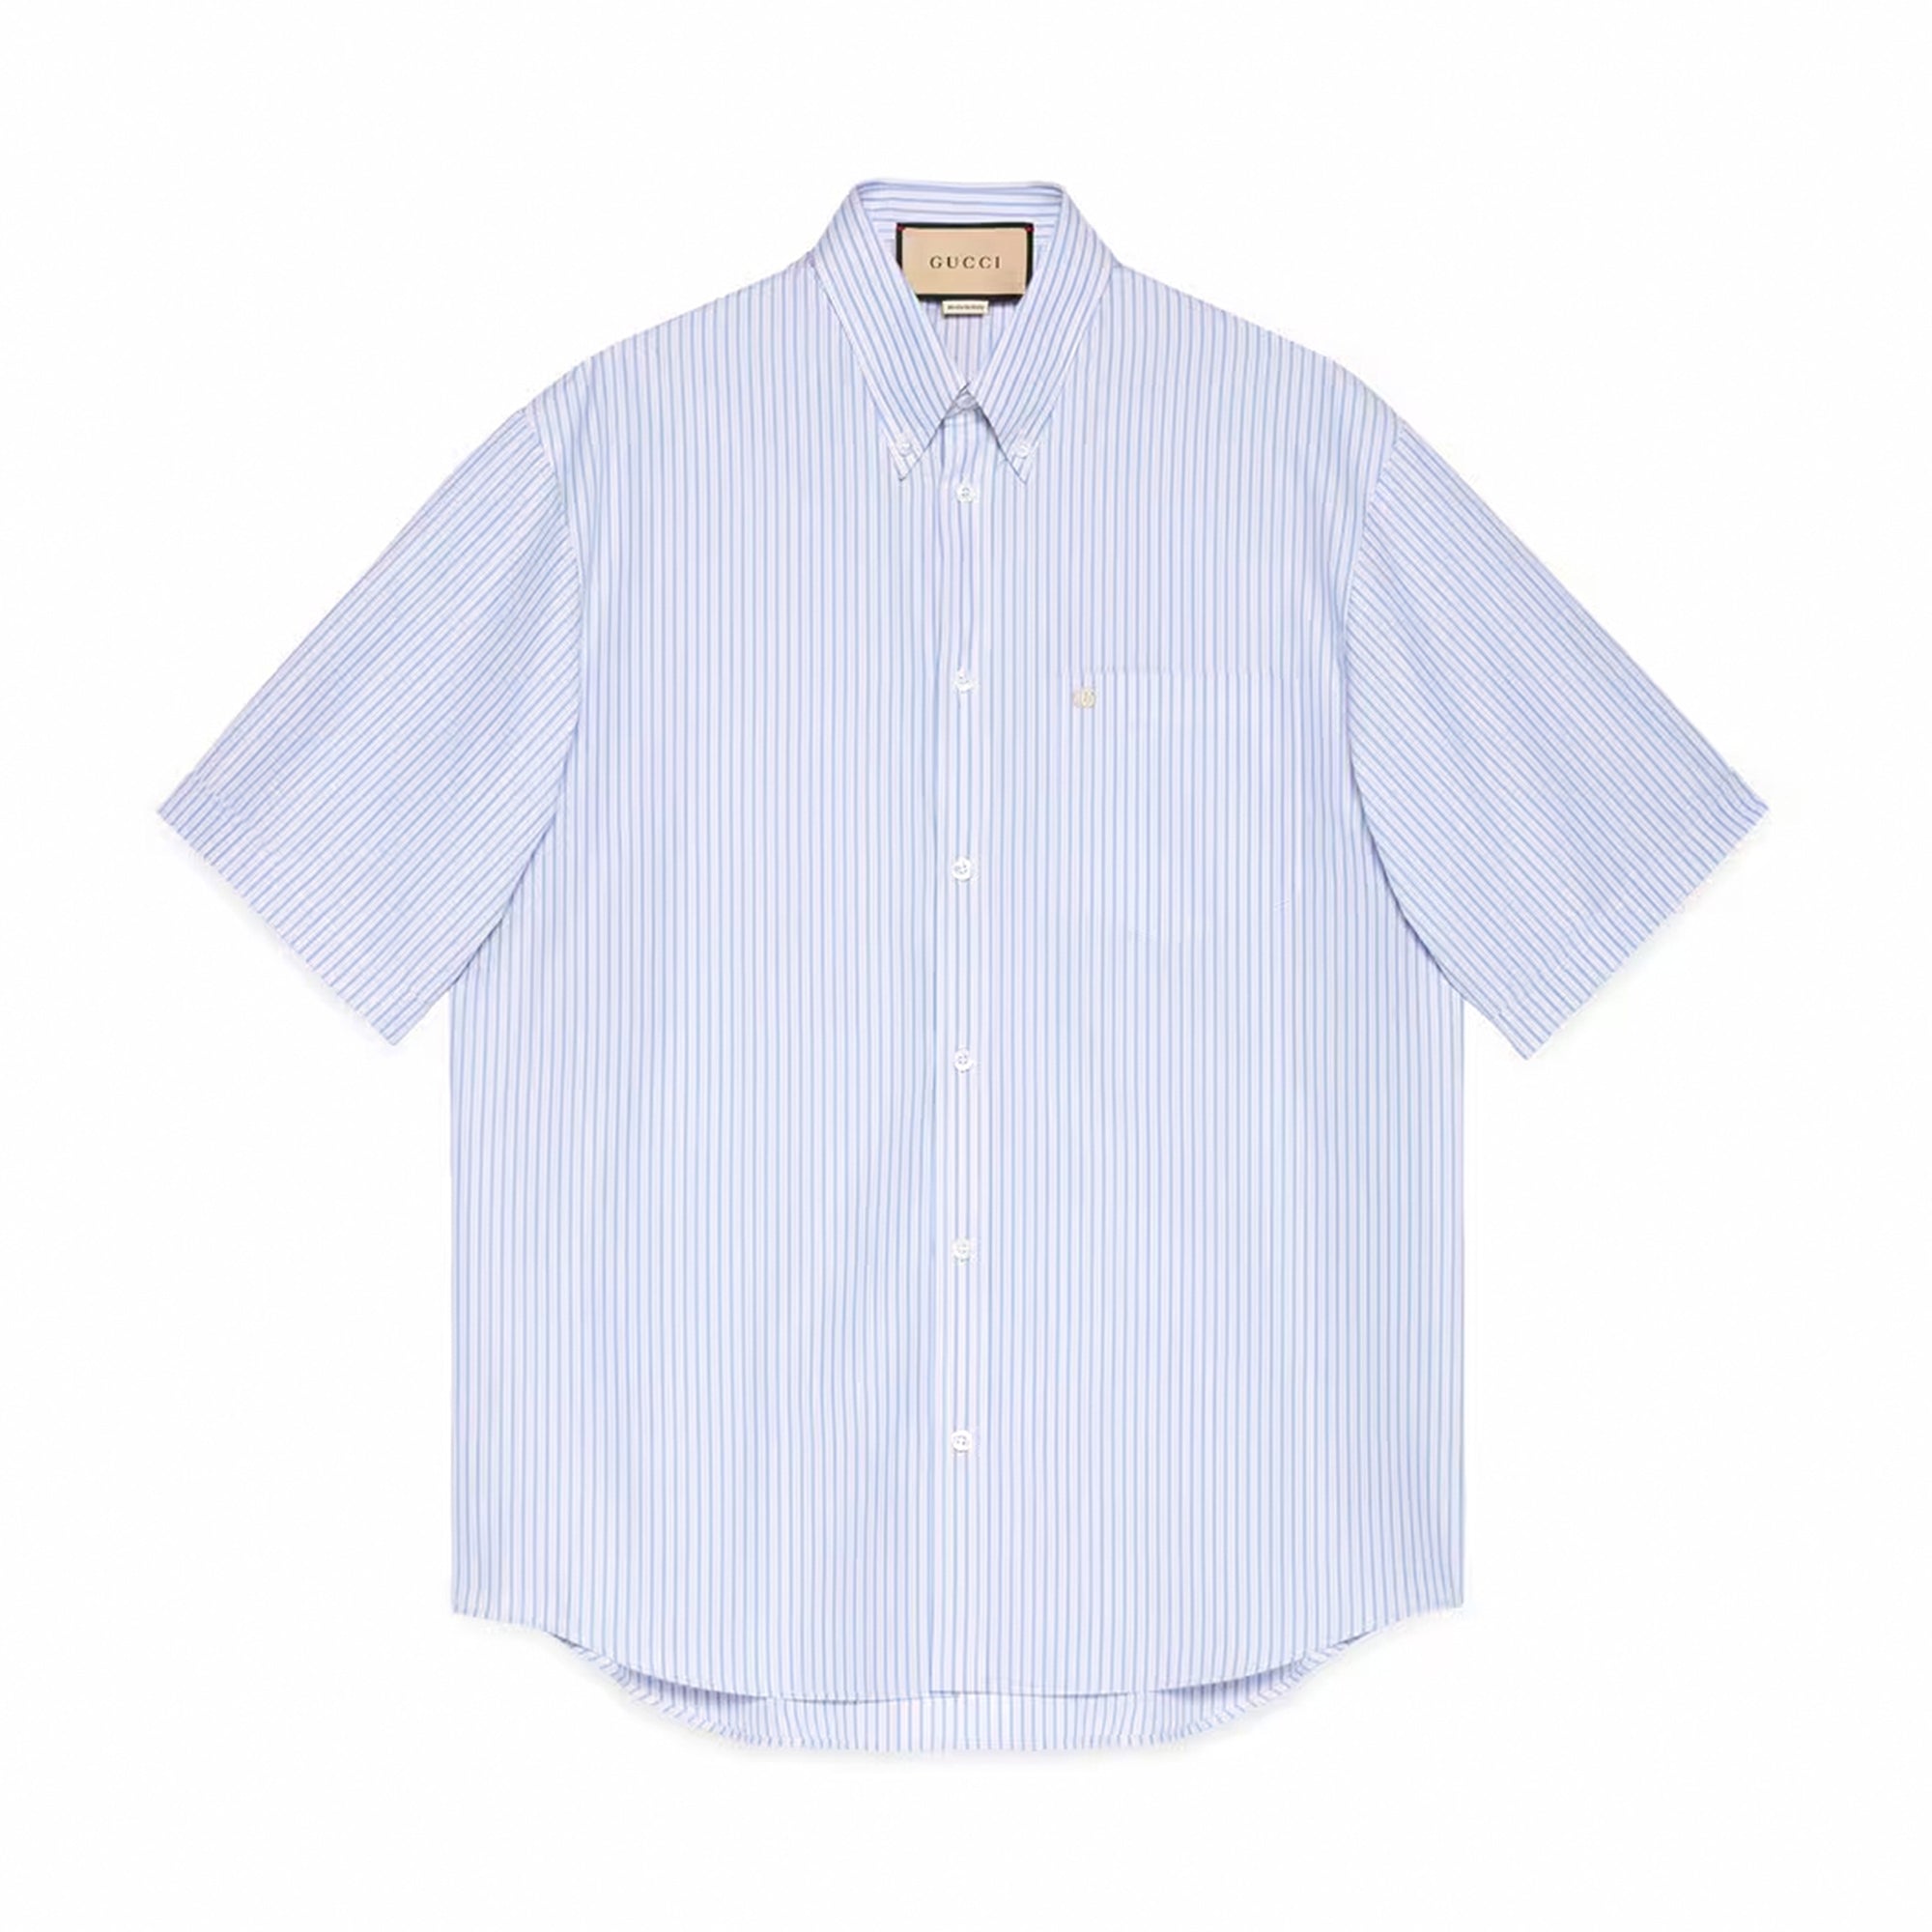 Gucci - Men’s Cotton Shirt with Double G - (Light Blue Stripe) view 1